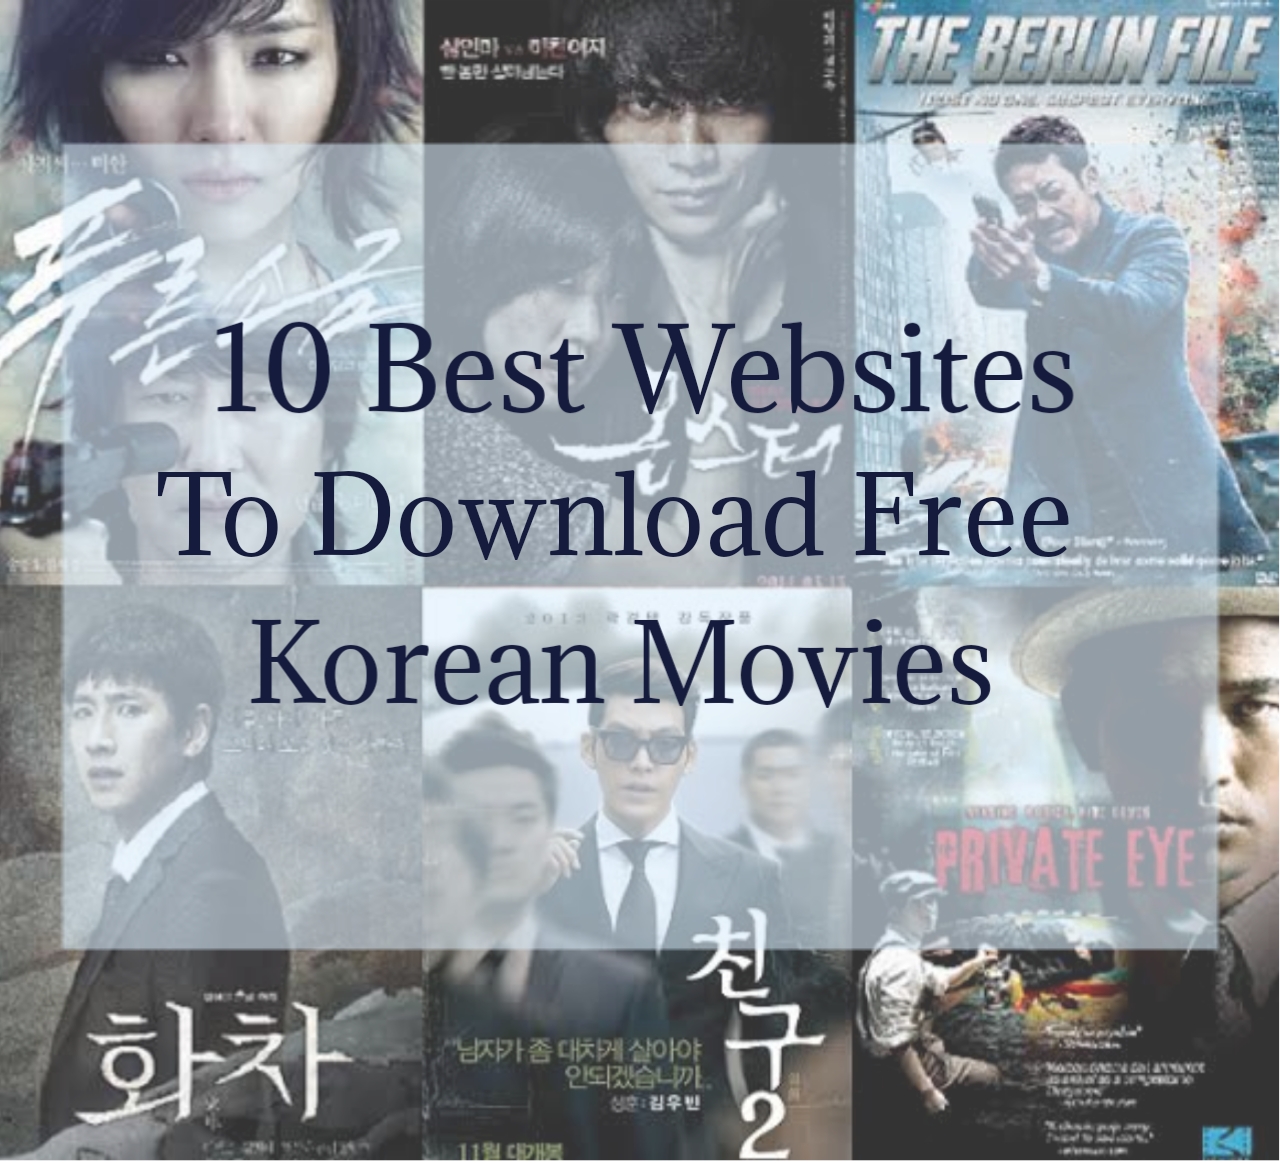 Korean movies download sites free